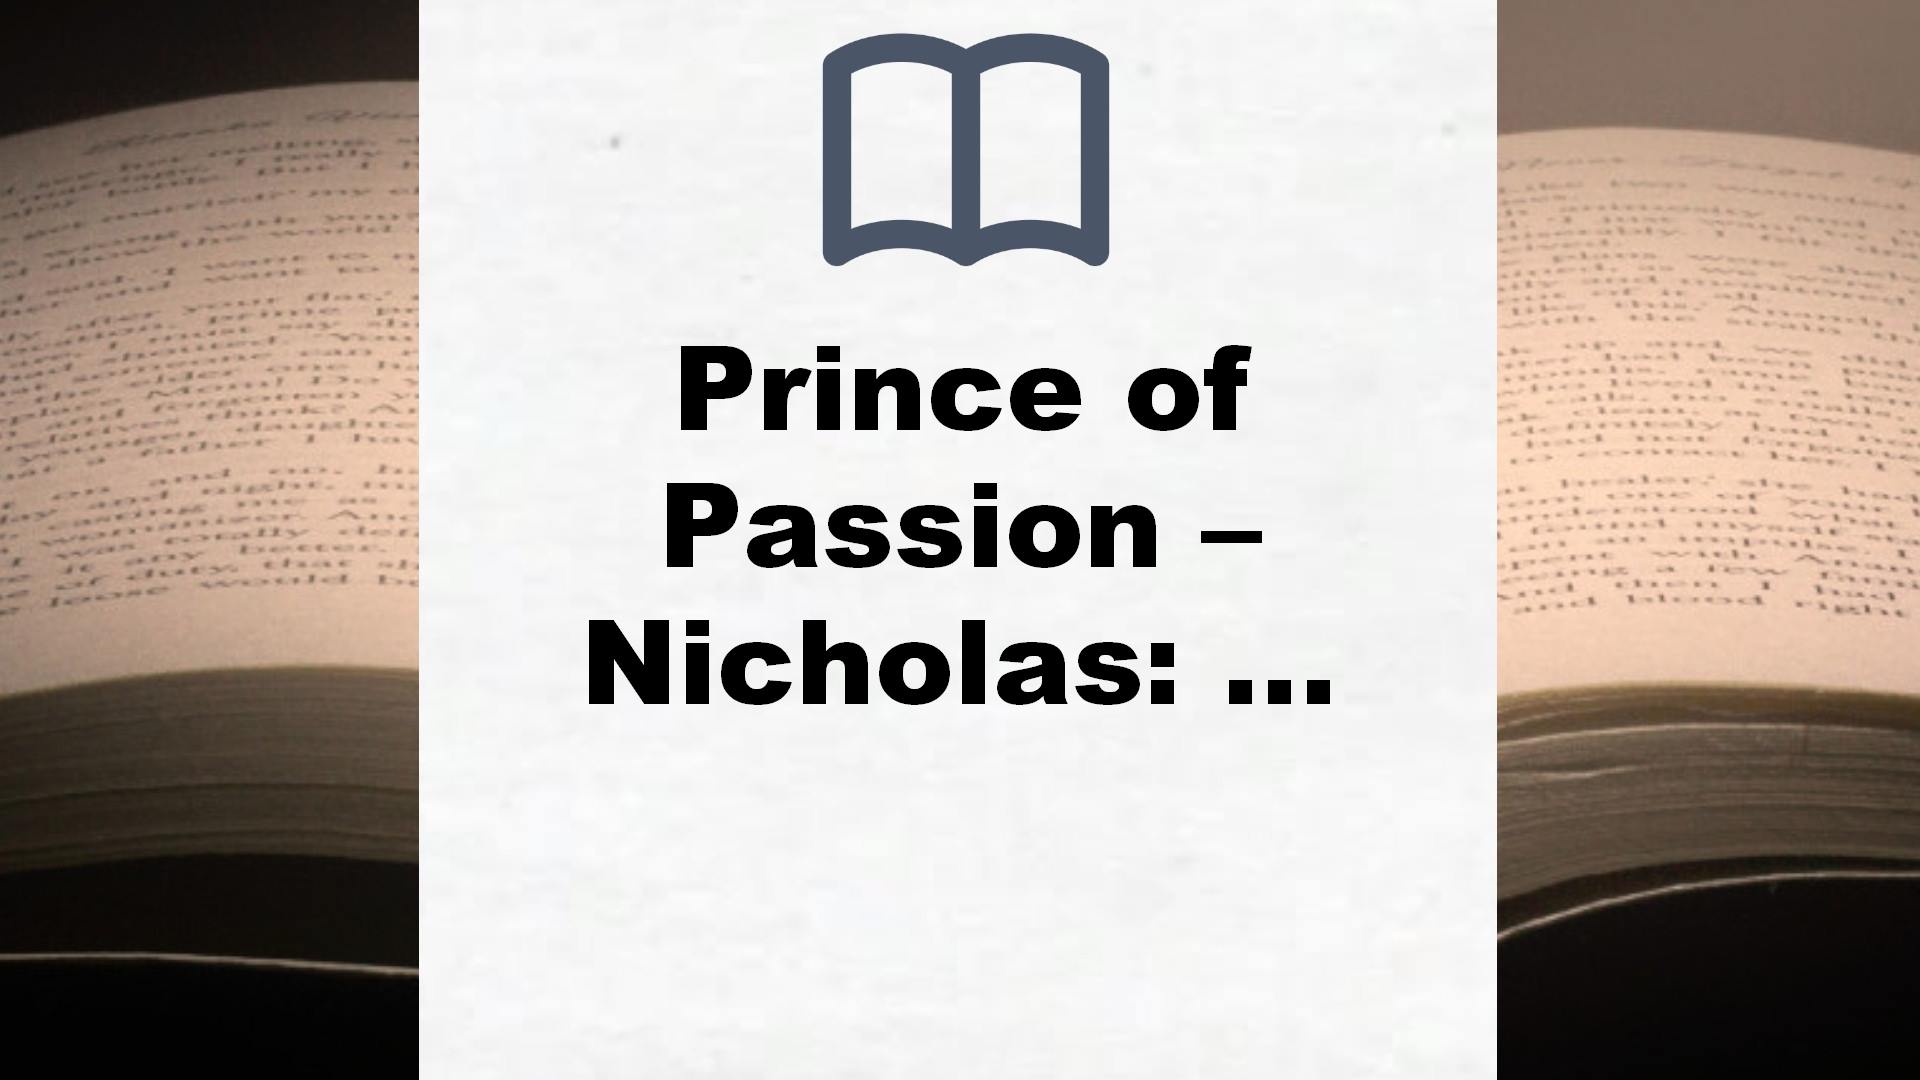 Prince of Passion – Nicholas: Roman (Die Prince-of-Passion-Reihe, Band 1) – Buchrezension